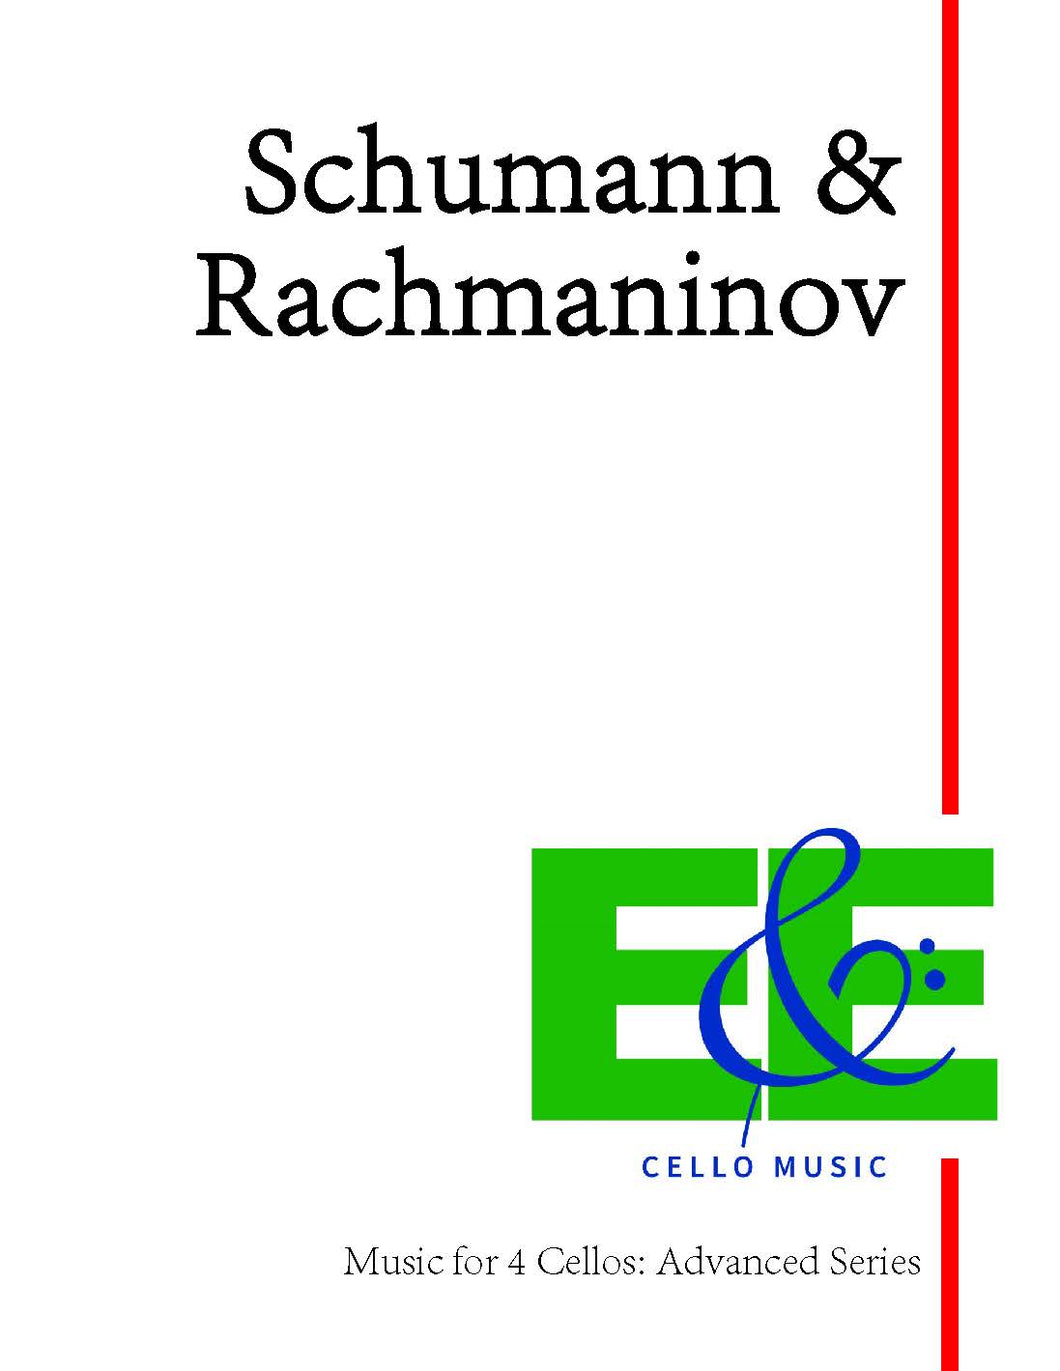 Schumann & Rachmaninov<br>Music for 4 Cellos:<br>Advanced Series<br>*Digital Download